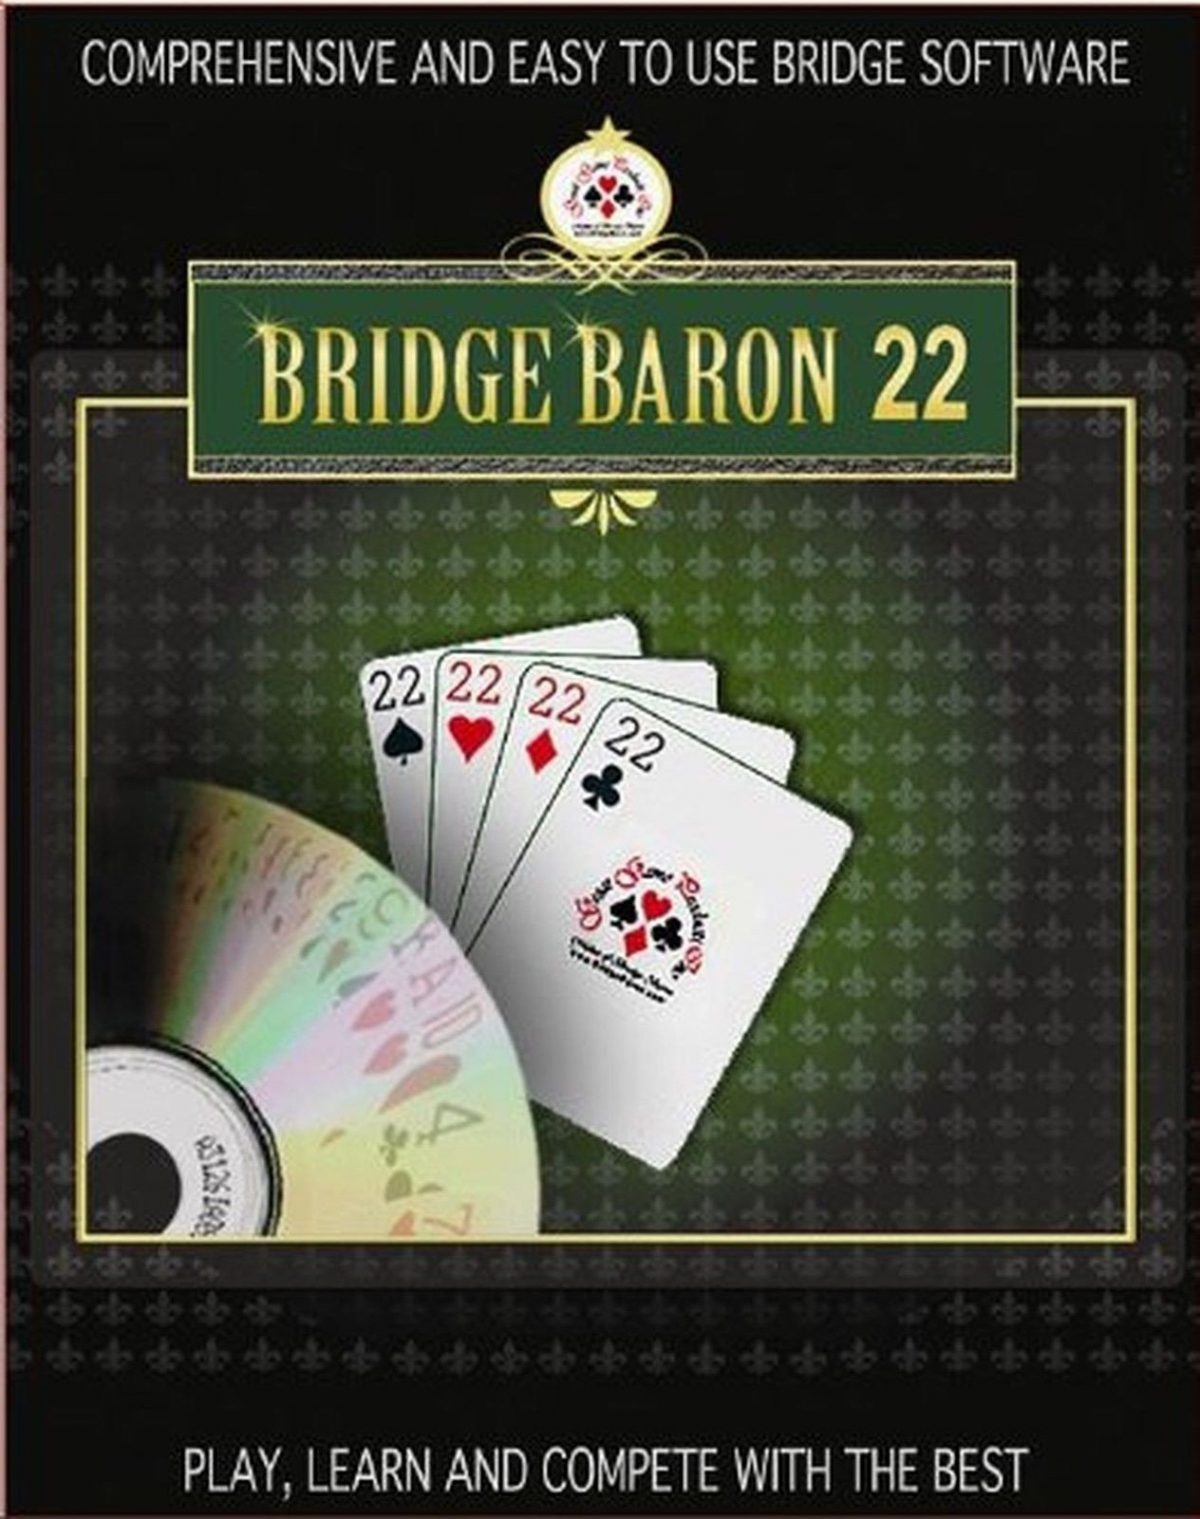 Bridge baron 27 review